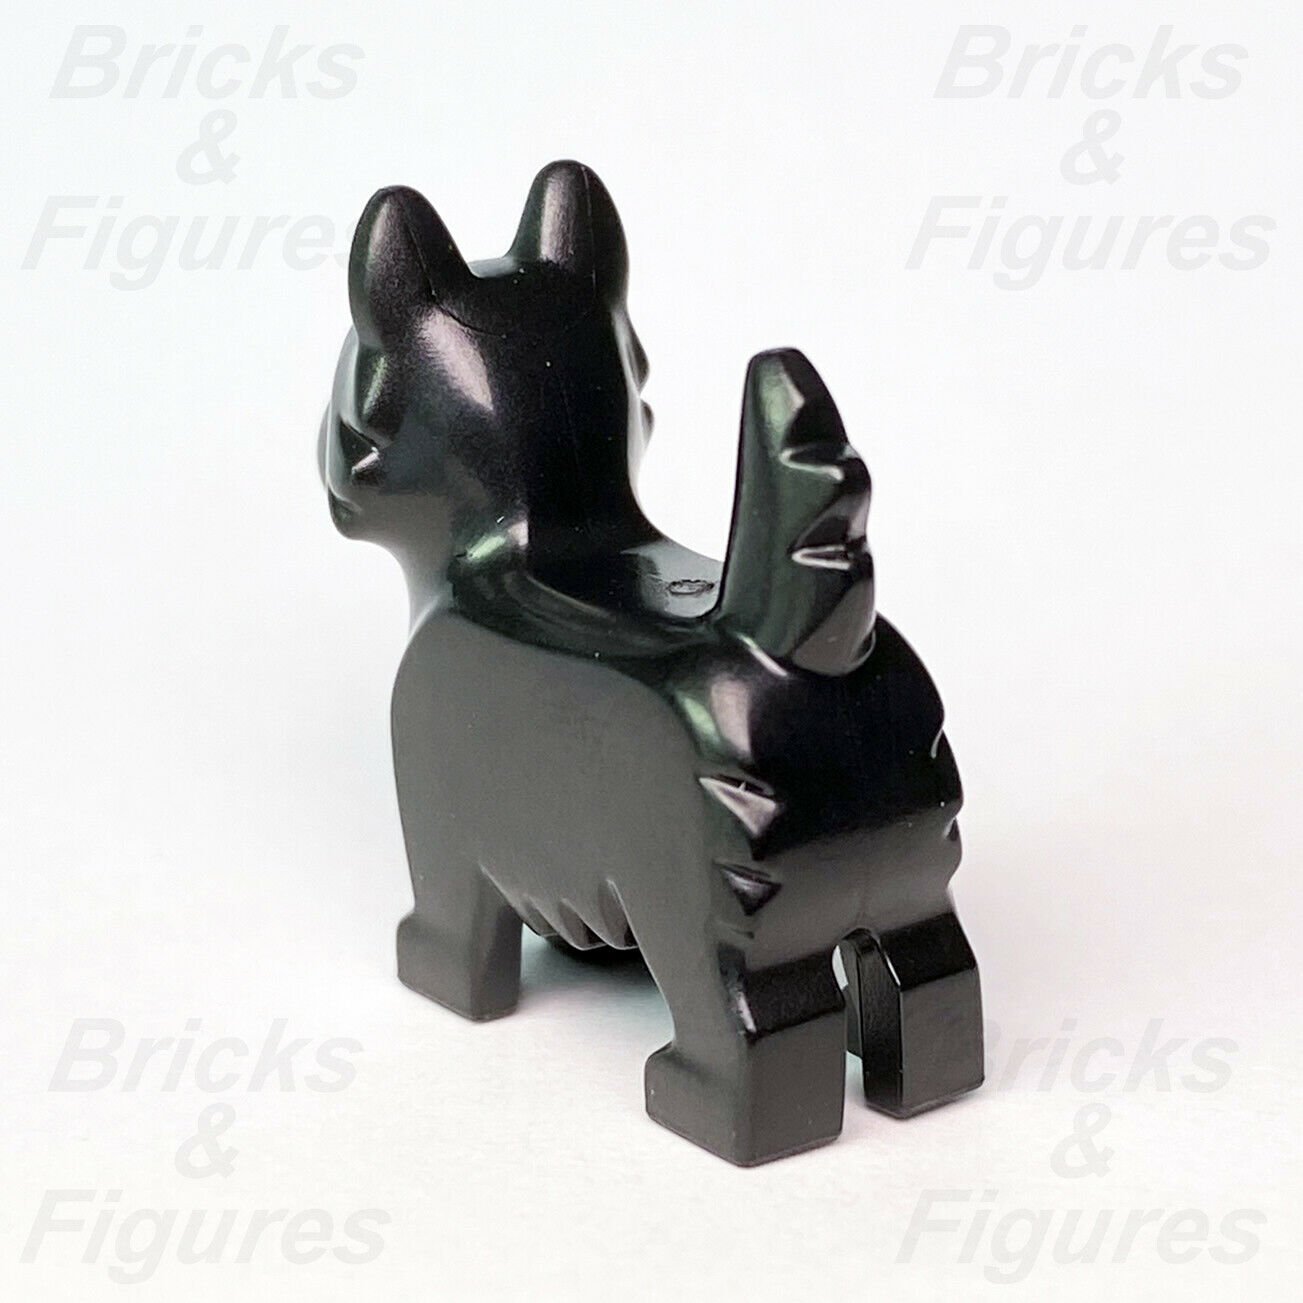 New City Town LEGO Black Terrier Dog Animal Build-A-Minifigure Part BAM bam2019 - Bricks & Figures